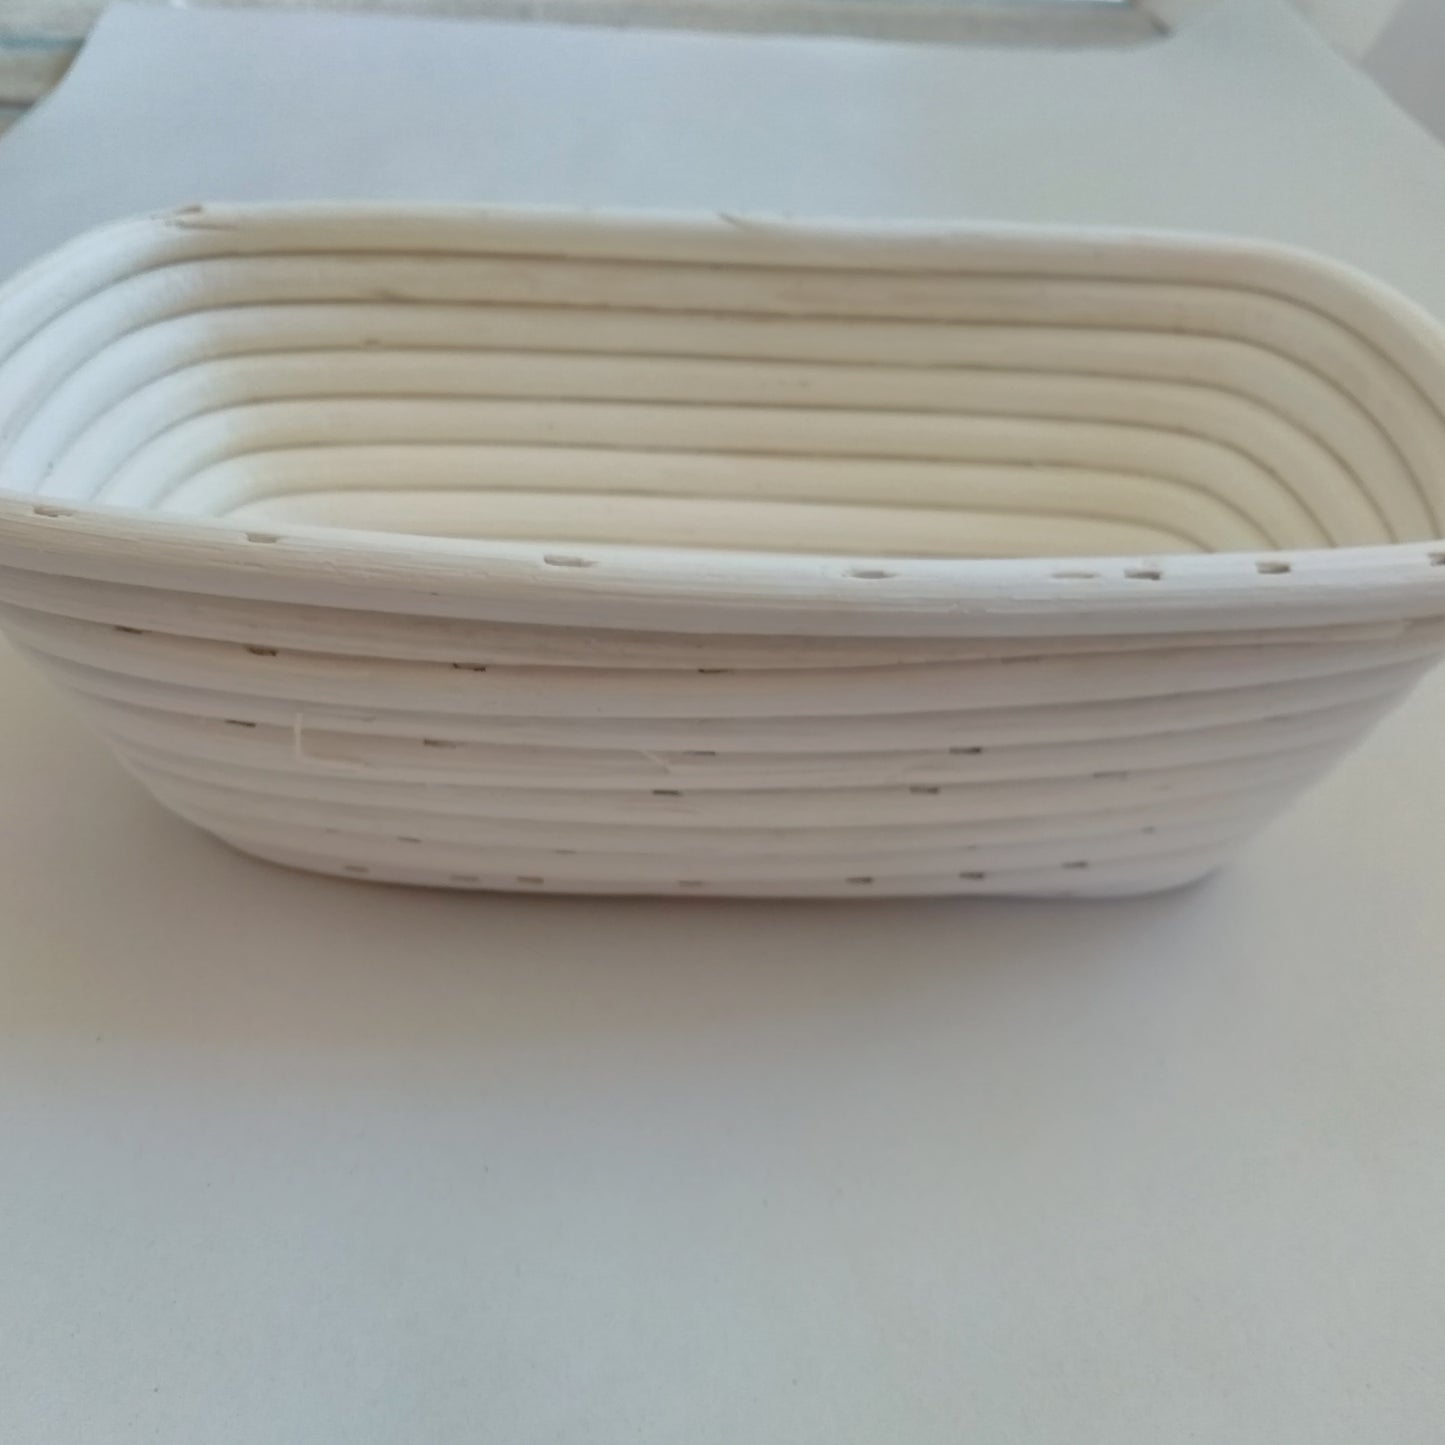 Rectangular 25cm Long Rattan Cane Banneton with Liner  Bread Dough Proving Proofing Basket Brotform